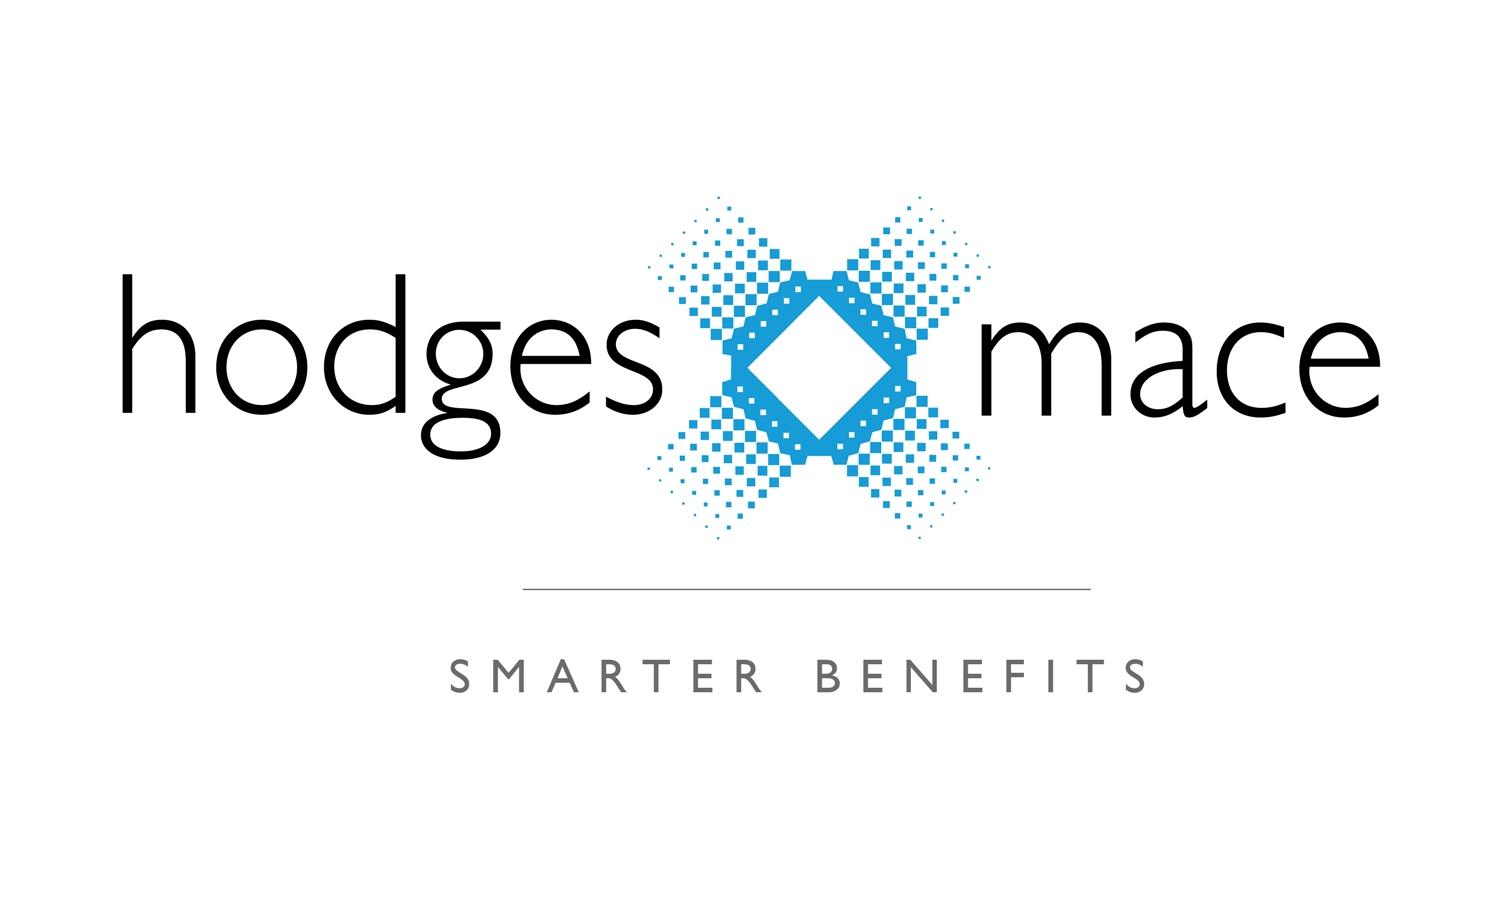 Mace Logo - Hodges Mace: Smarter Benefits